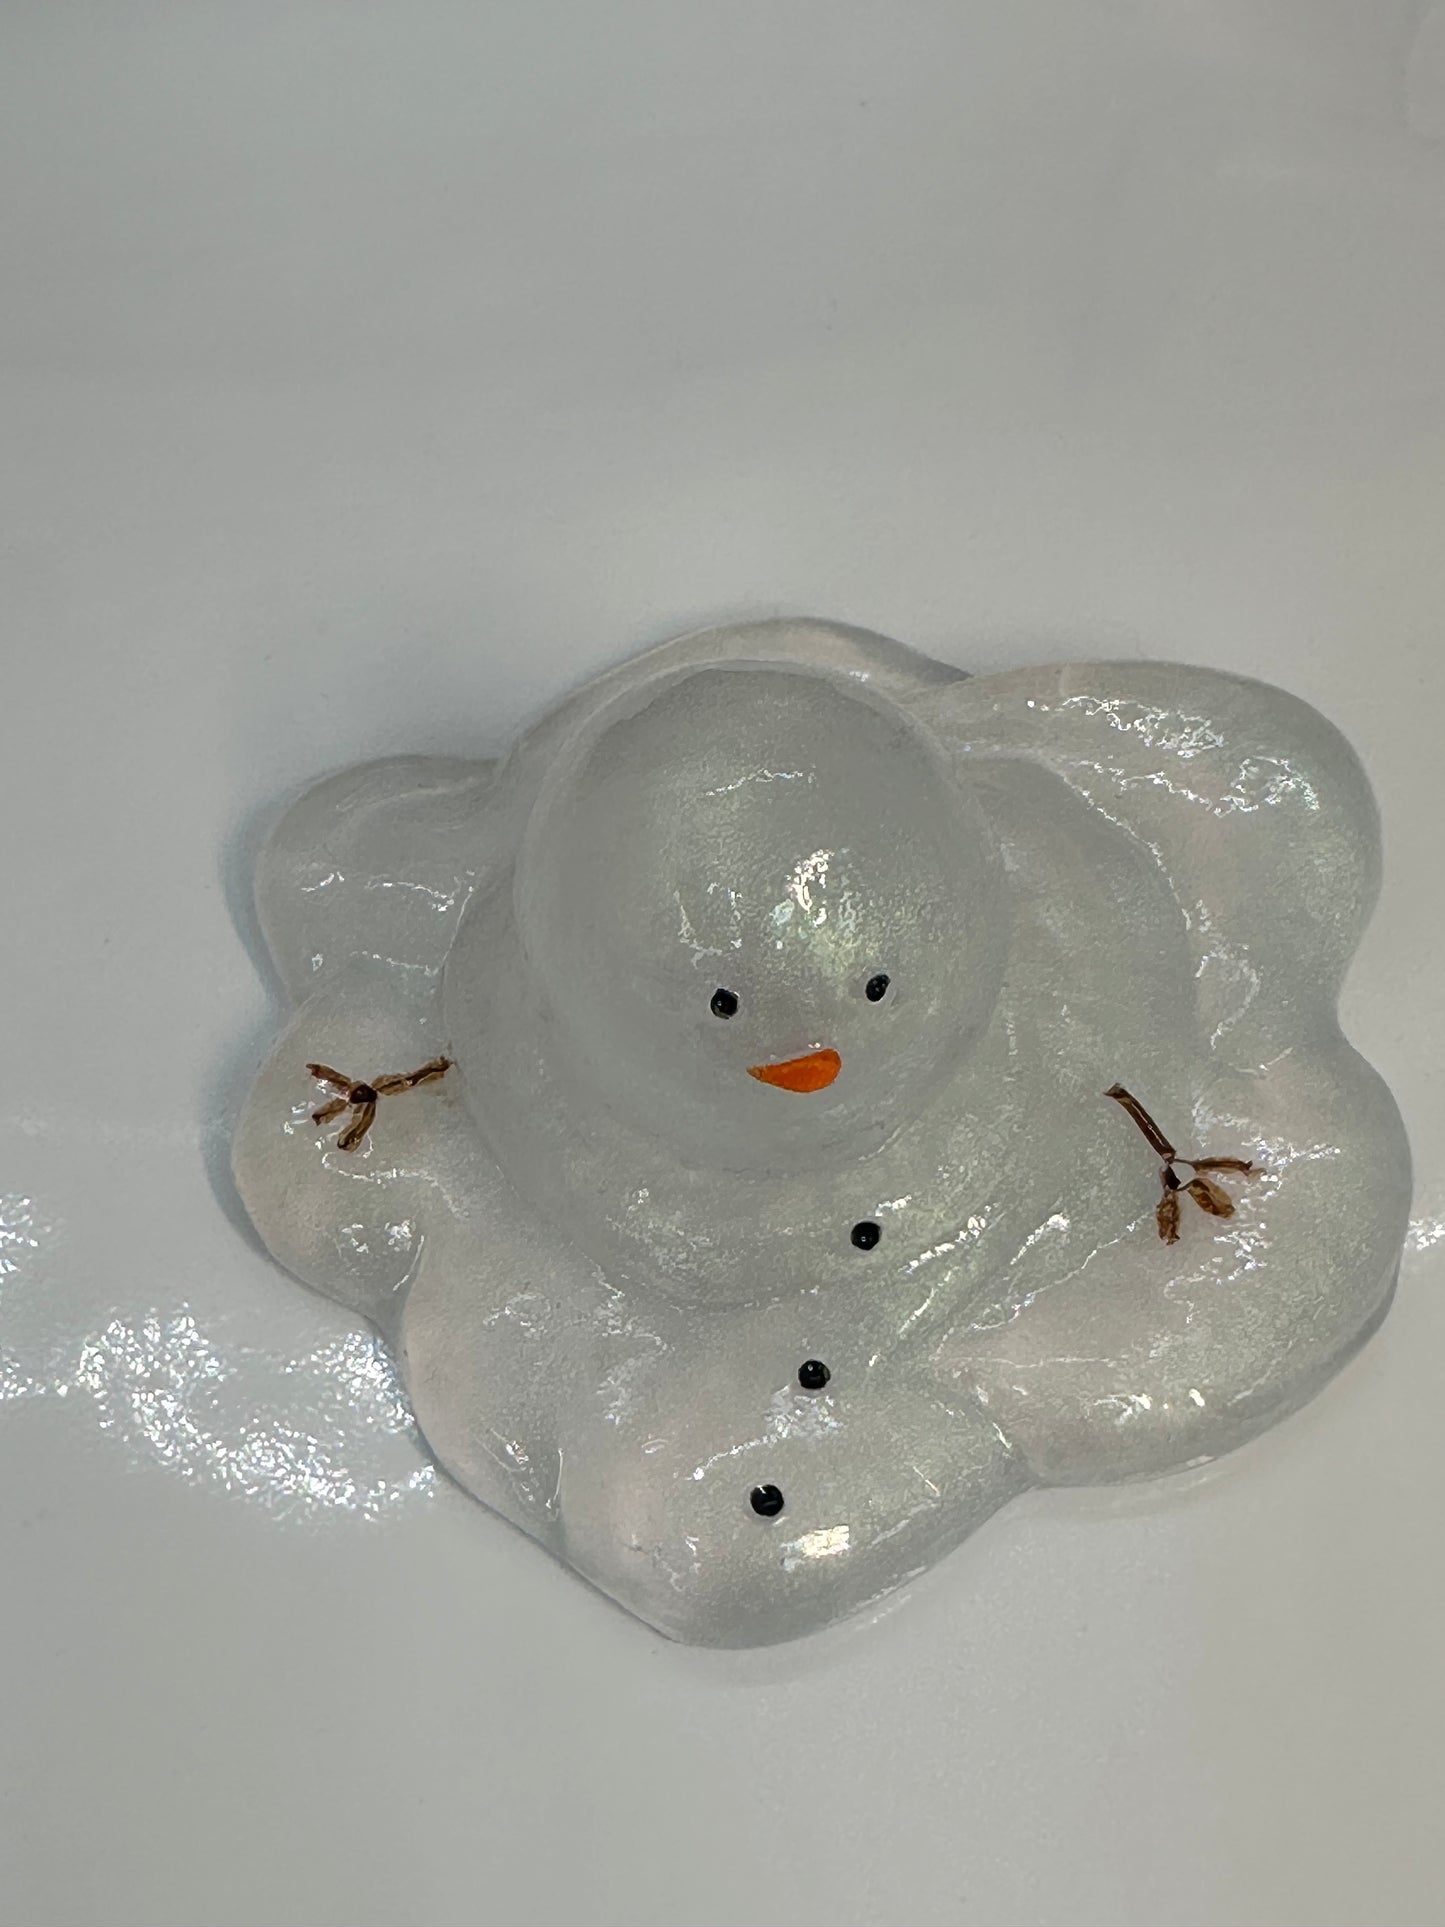 Melting Snowman Figurine